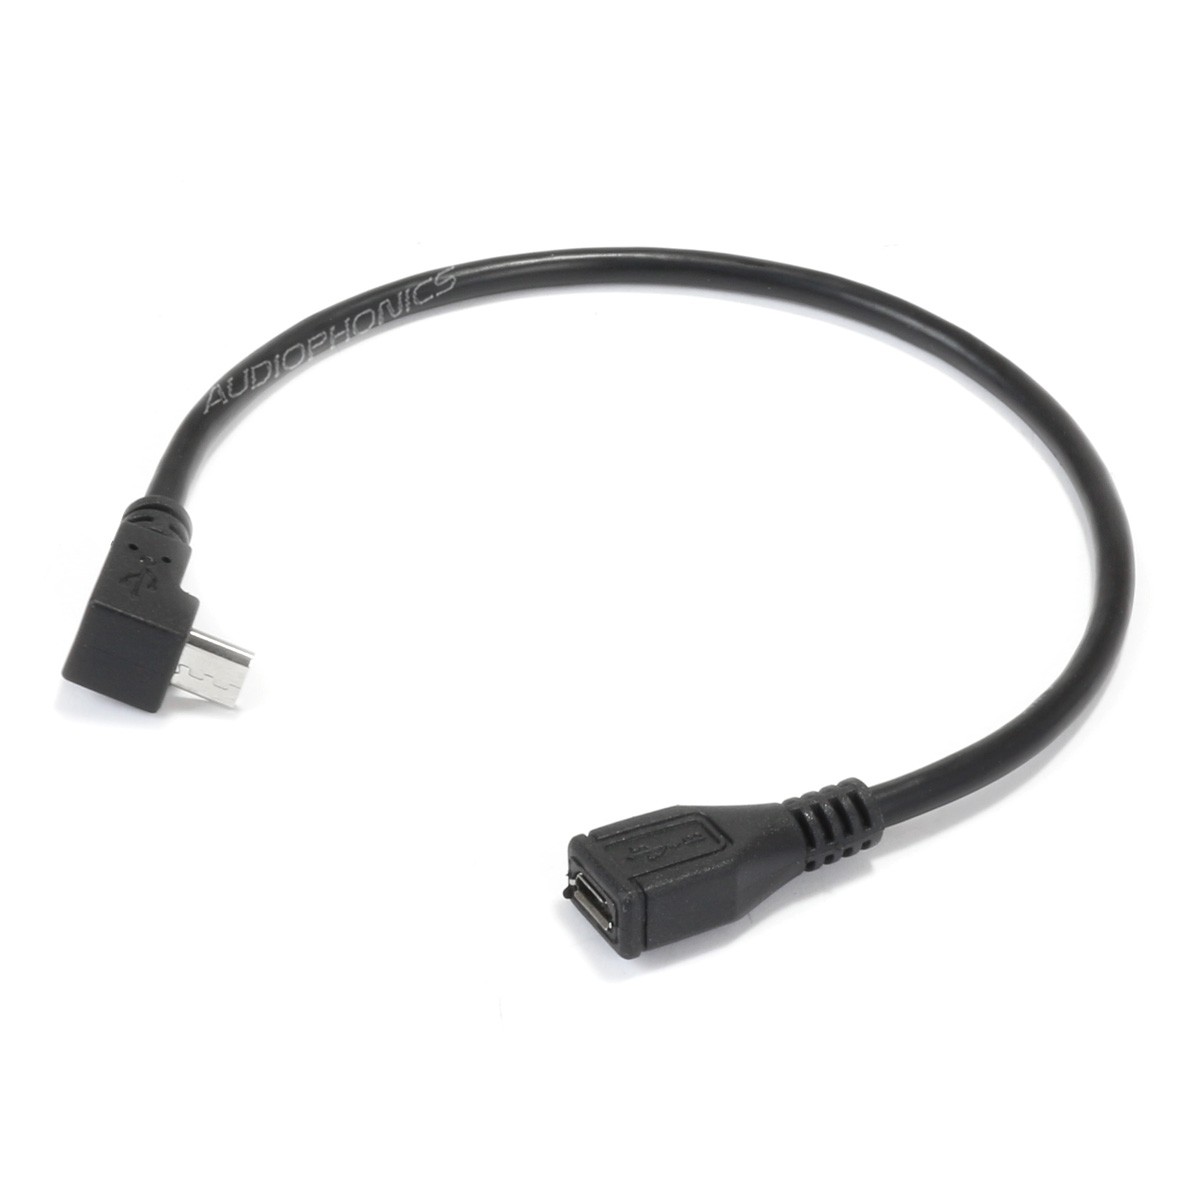 Rallonge Micro USB-B Mâle Coudé vers Micro USB Femelle 25cm